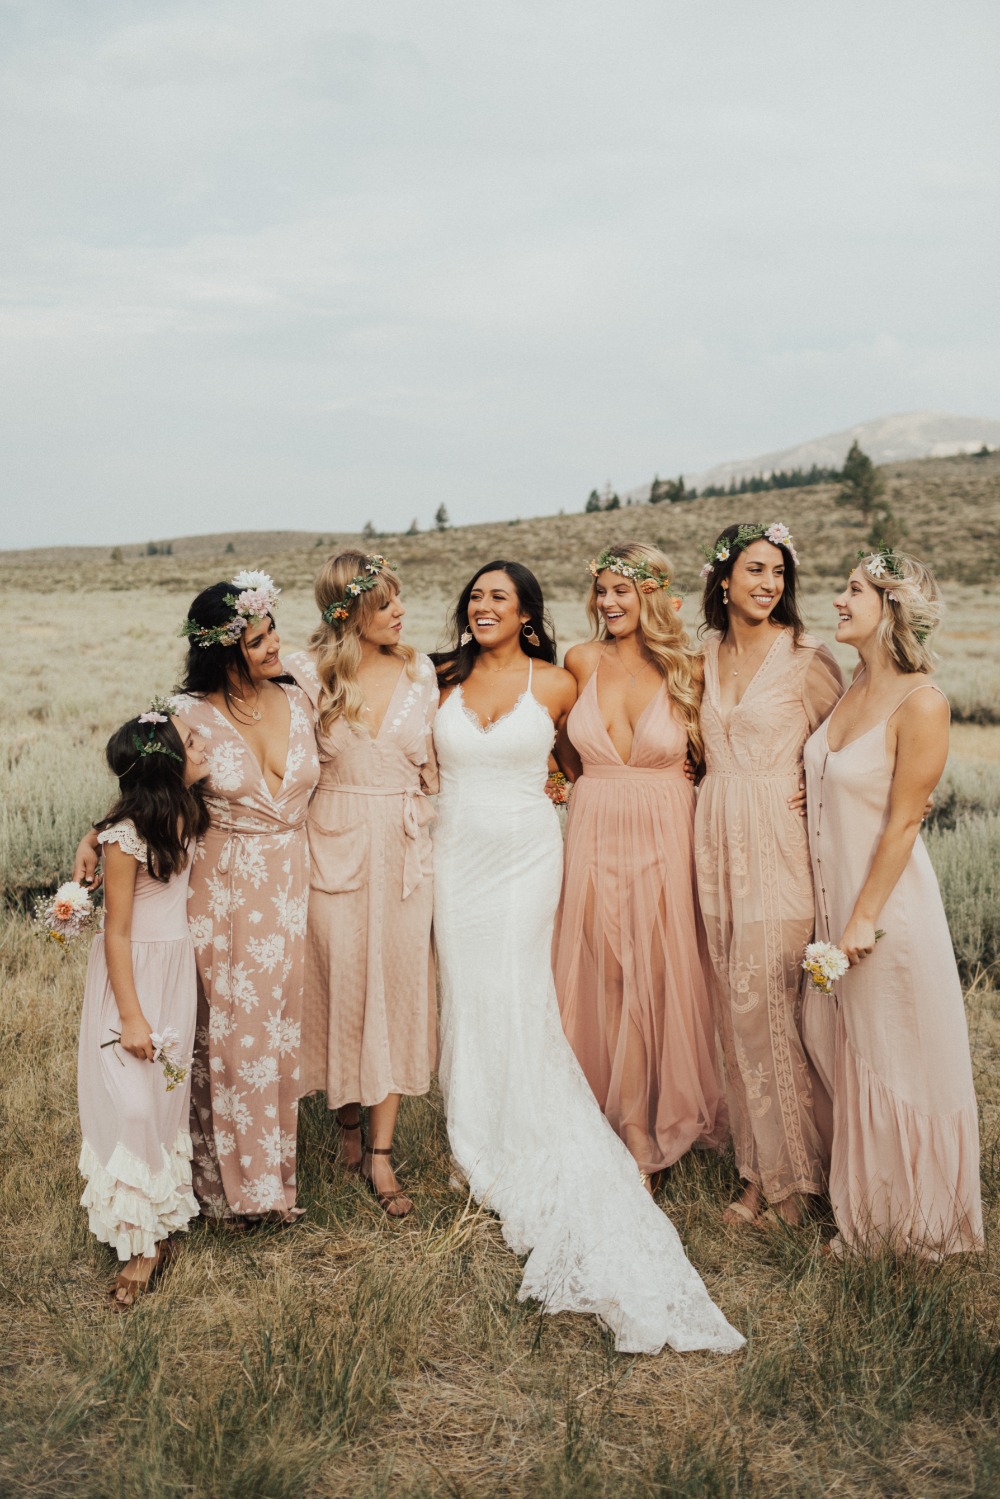 Mix and match bridesmaid dresses